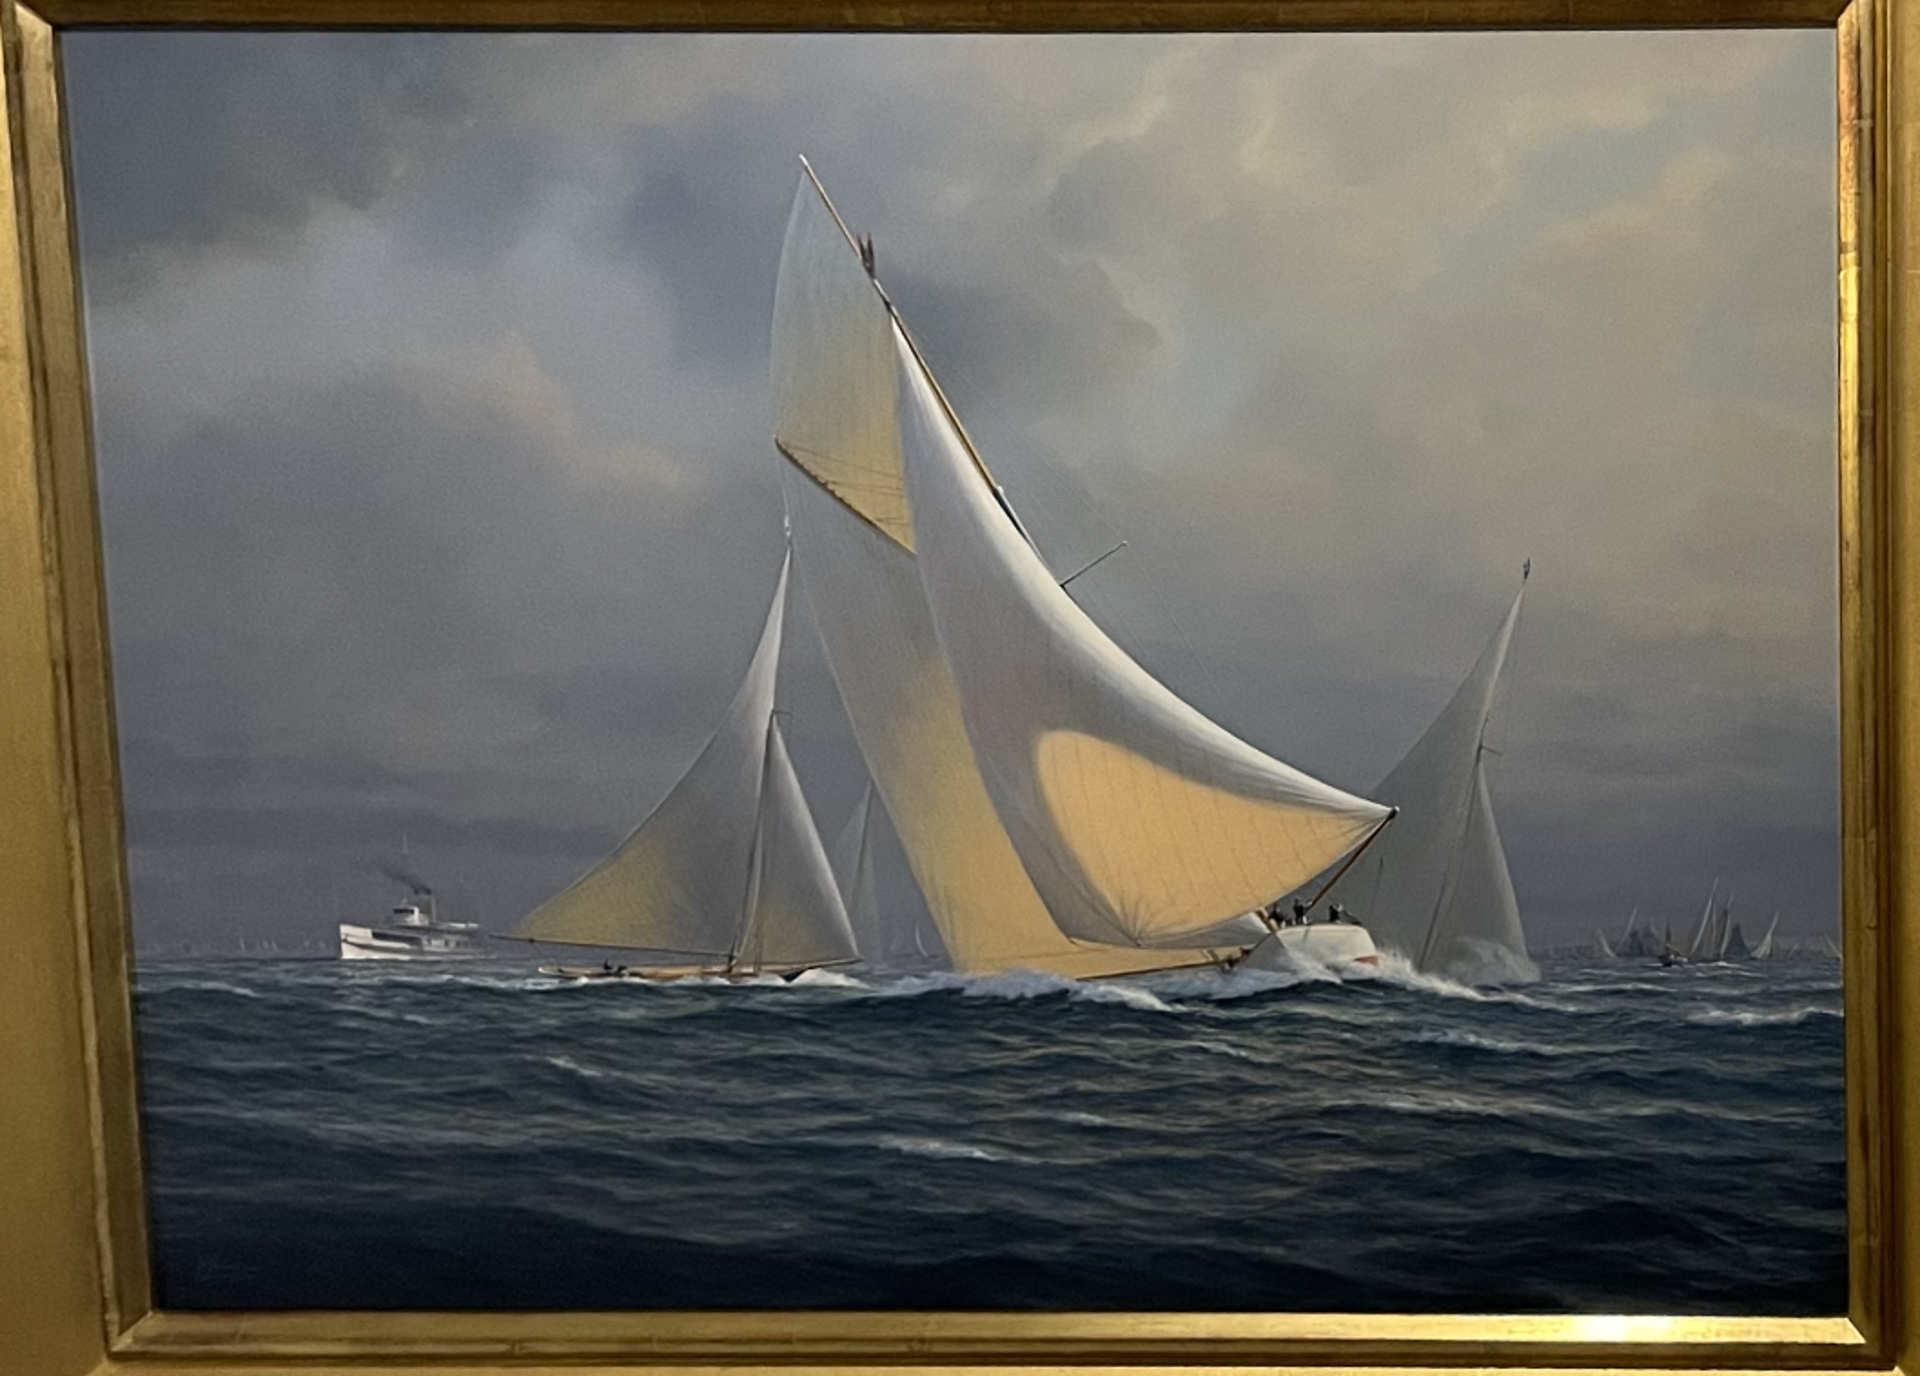 Steamer "Sankaty" Leaving Boston for Nantucket by Tim Thompson